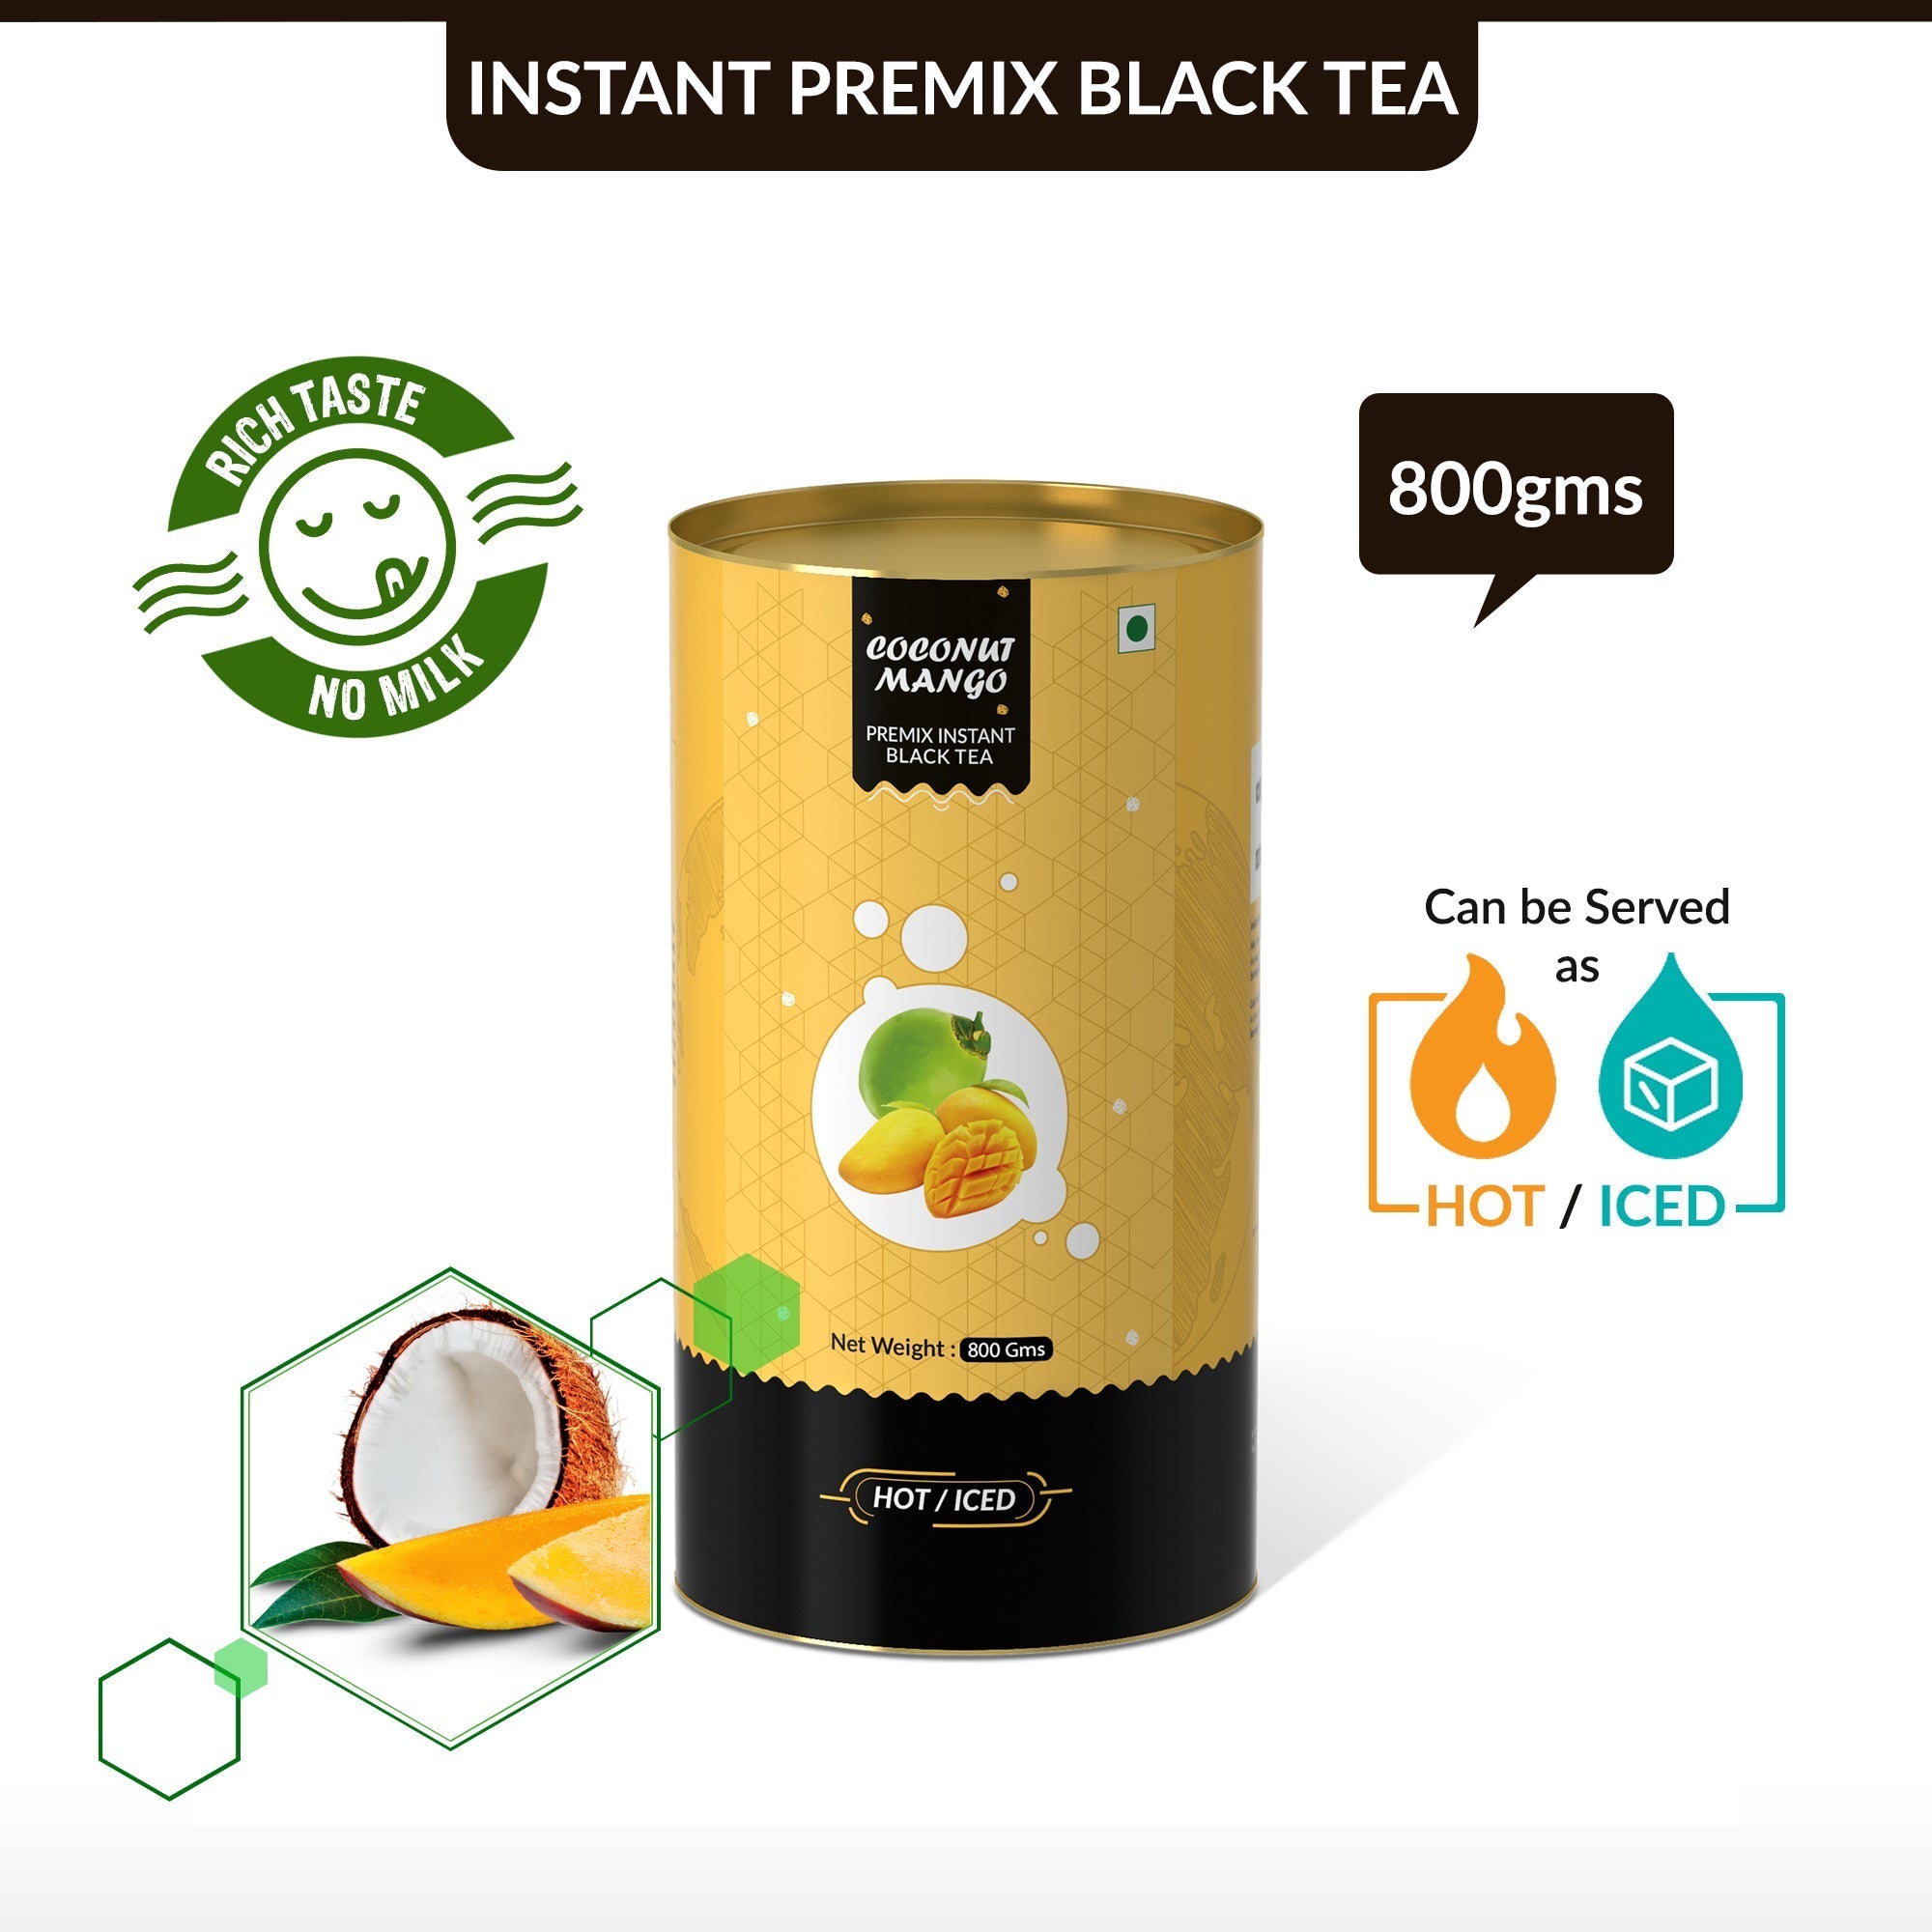 Coconut Mango Flavored Instant Black Tea - 400 gms